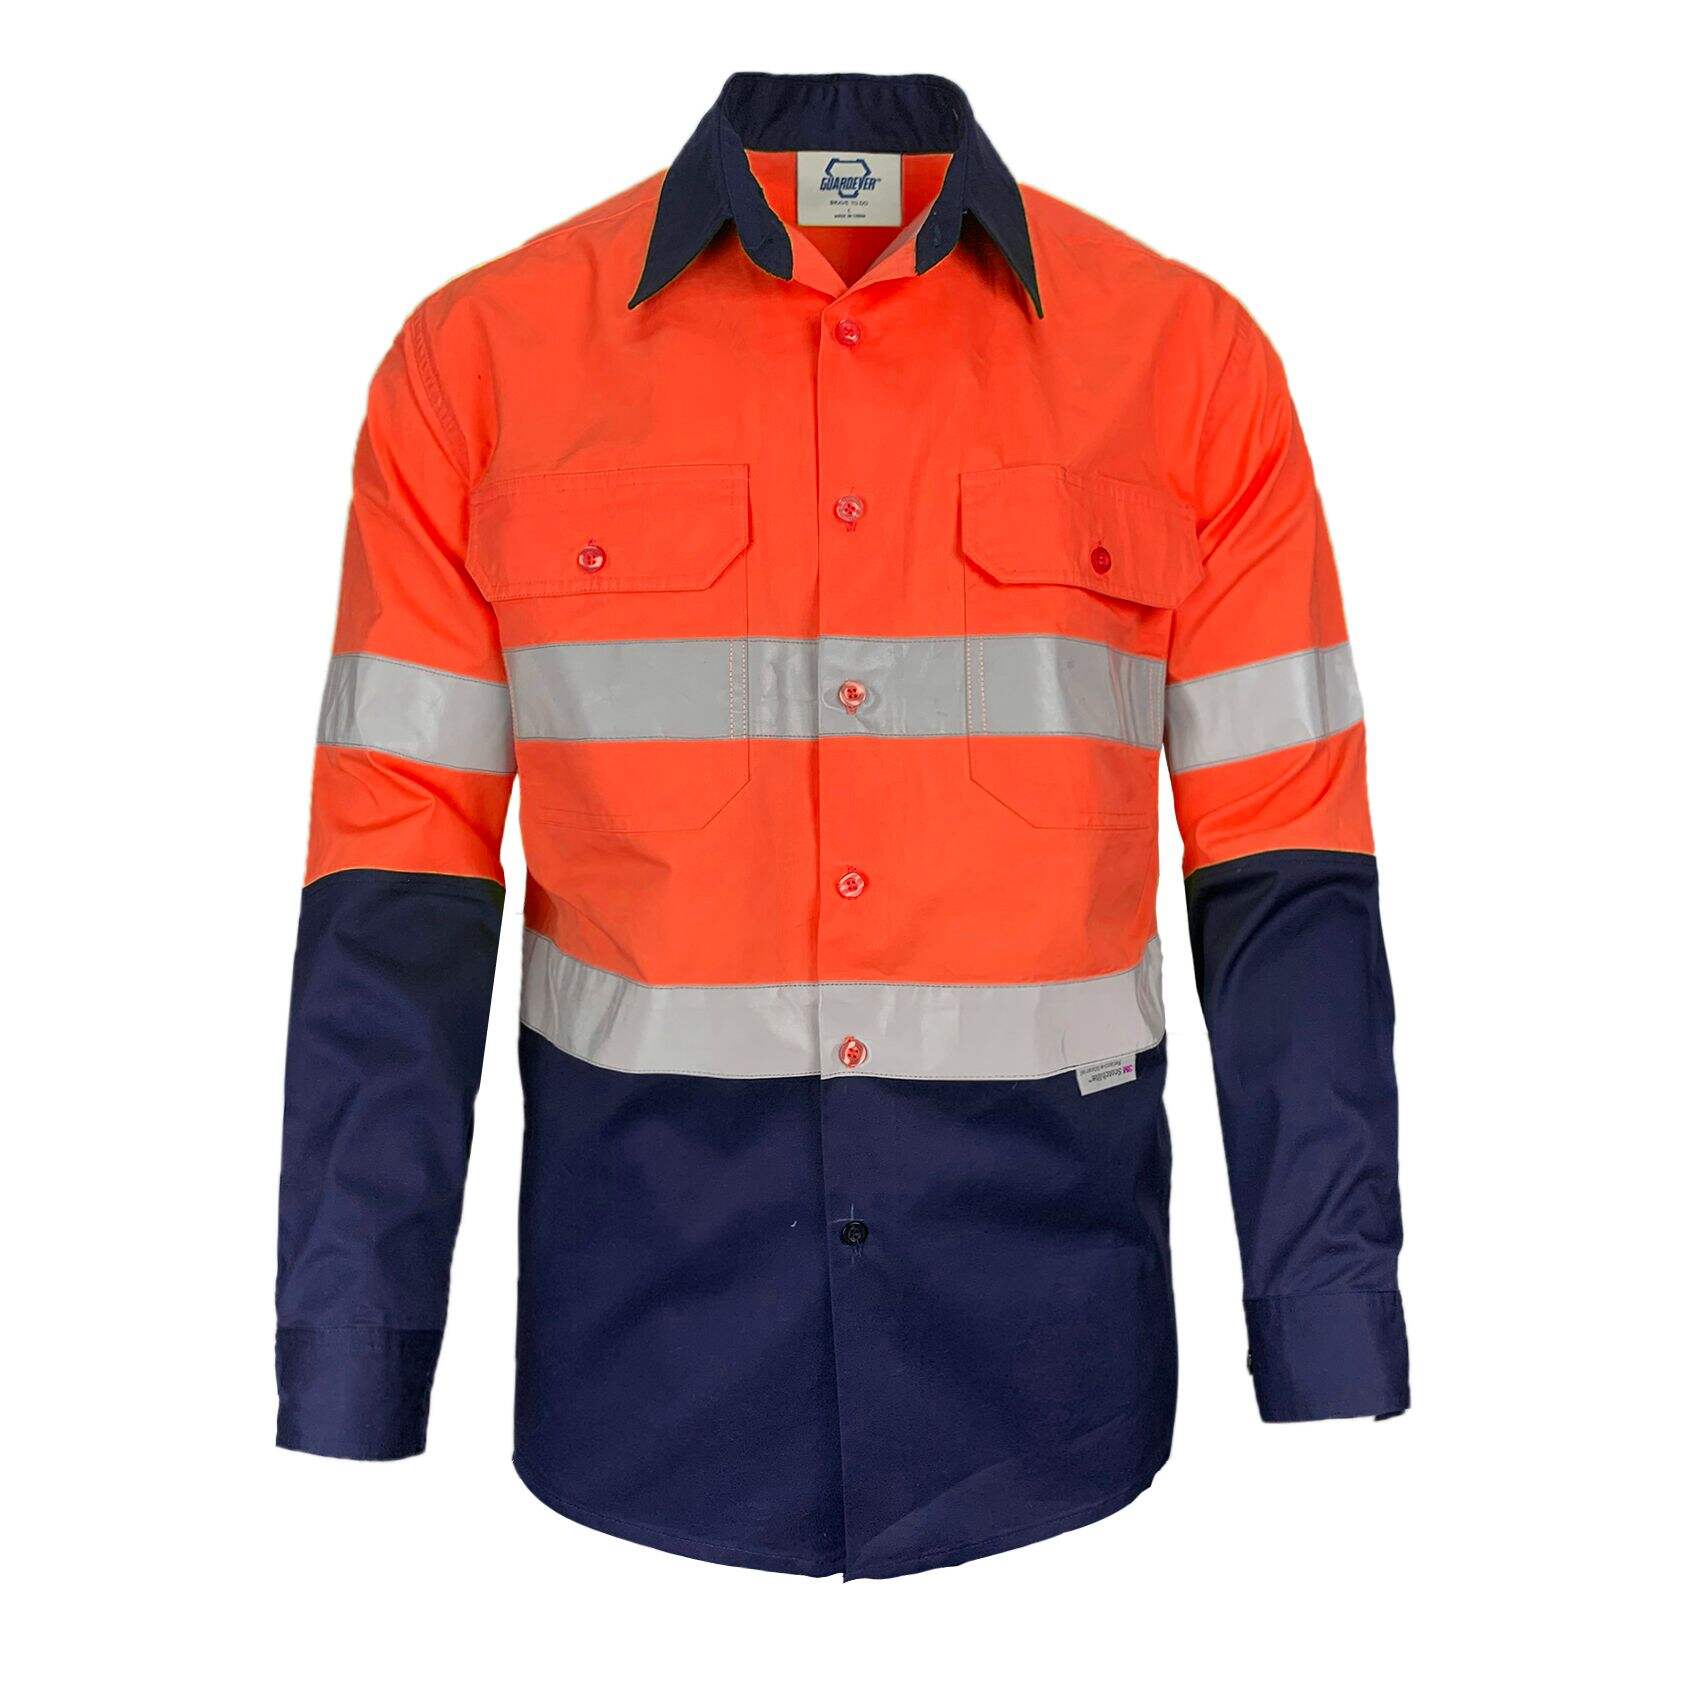 Customize Australian 2 Tones Cotton Drill  Reflective Shirt Safety Long Sleeve Construction Safety Mining Industry UPF50+ Hi Vis Work Wear Shirt